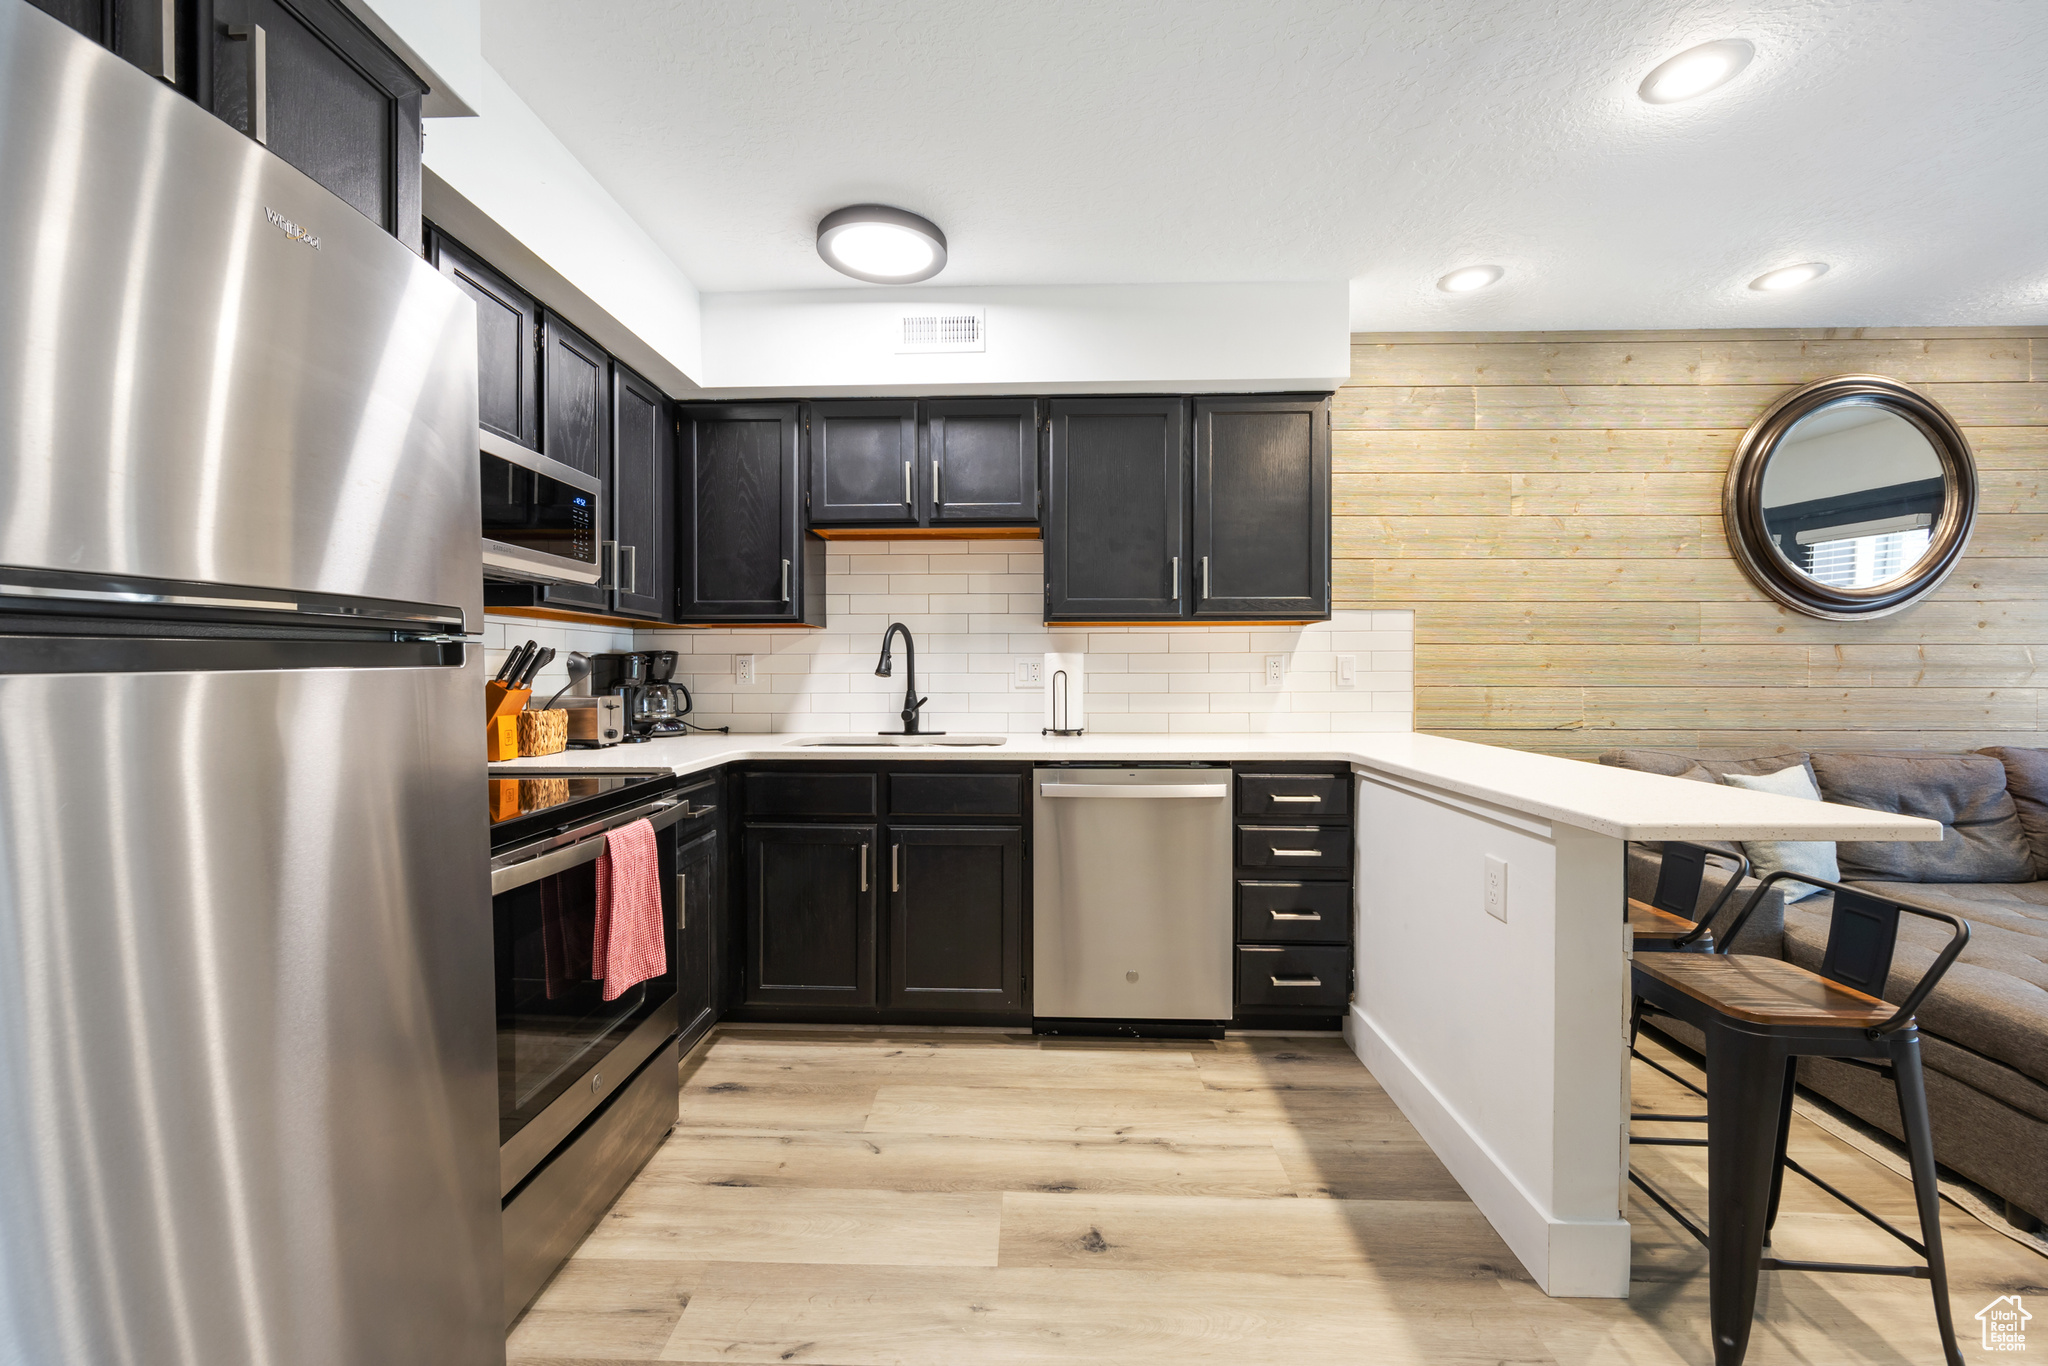 Kitchen featuring a kitchen bar, appliances with stainless steel finishes, light LVP flooring, tasteful backsplash, and sink